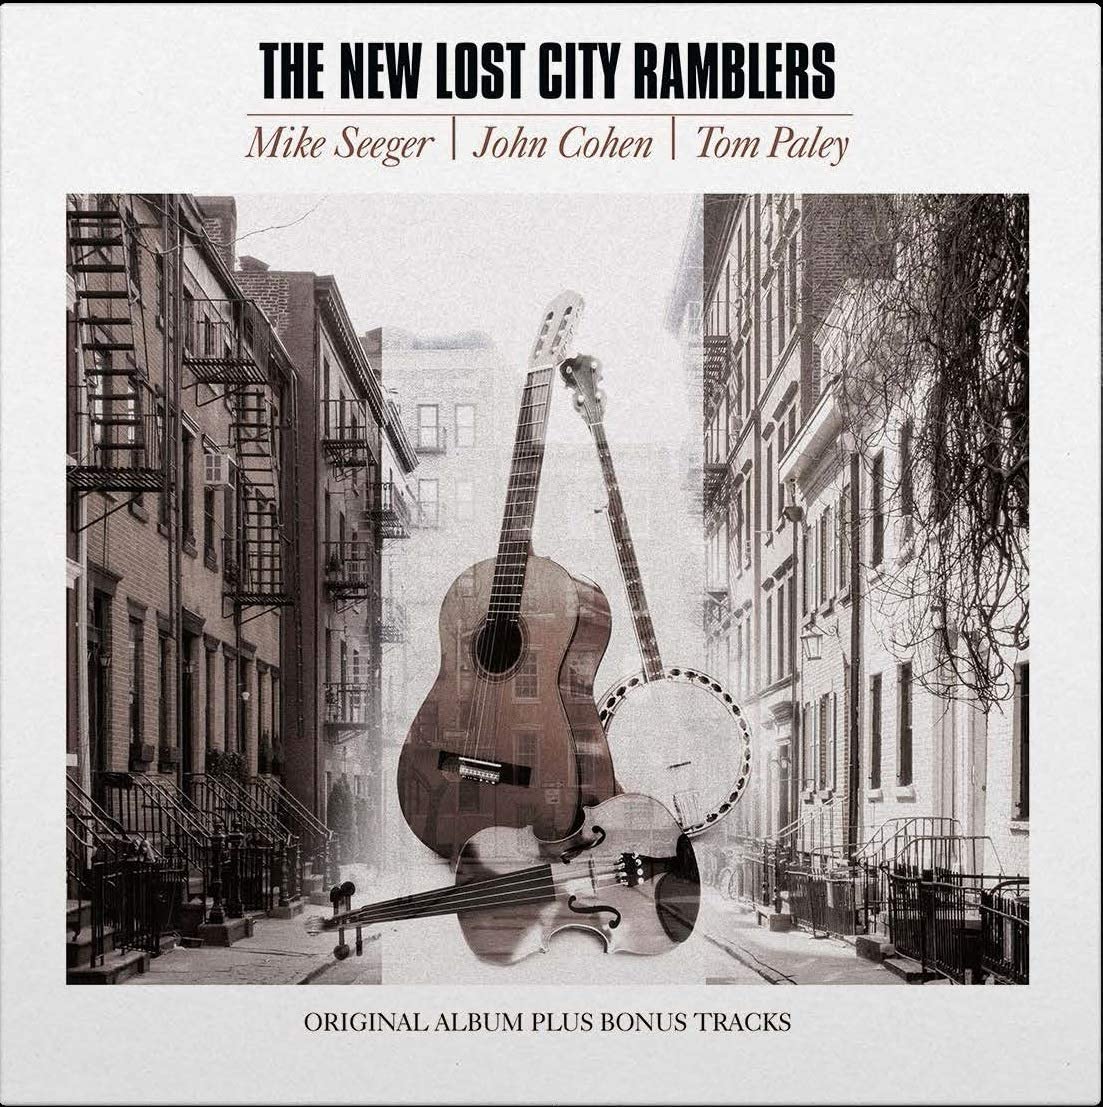 New Lost City Ramblers/The New Lost City Ramblers (2 bonus tracks) [LP]